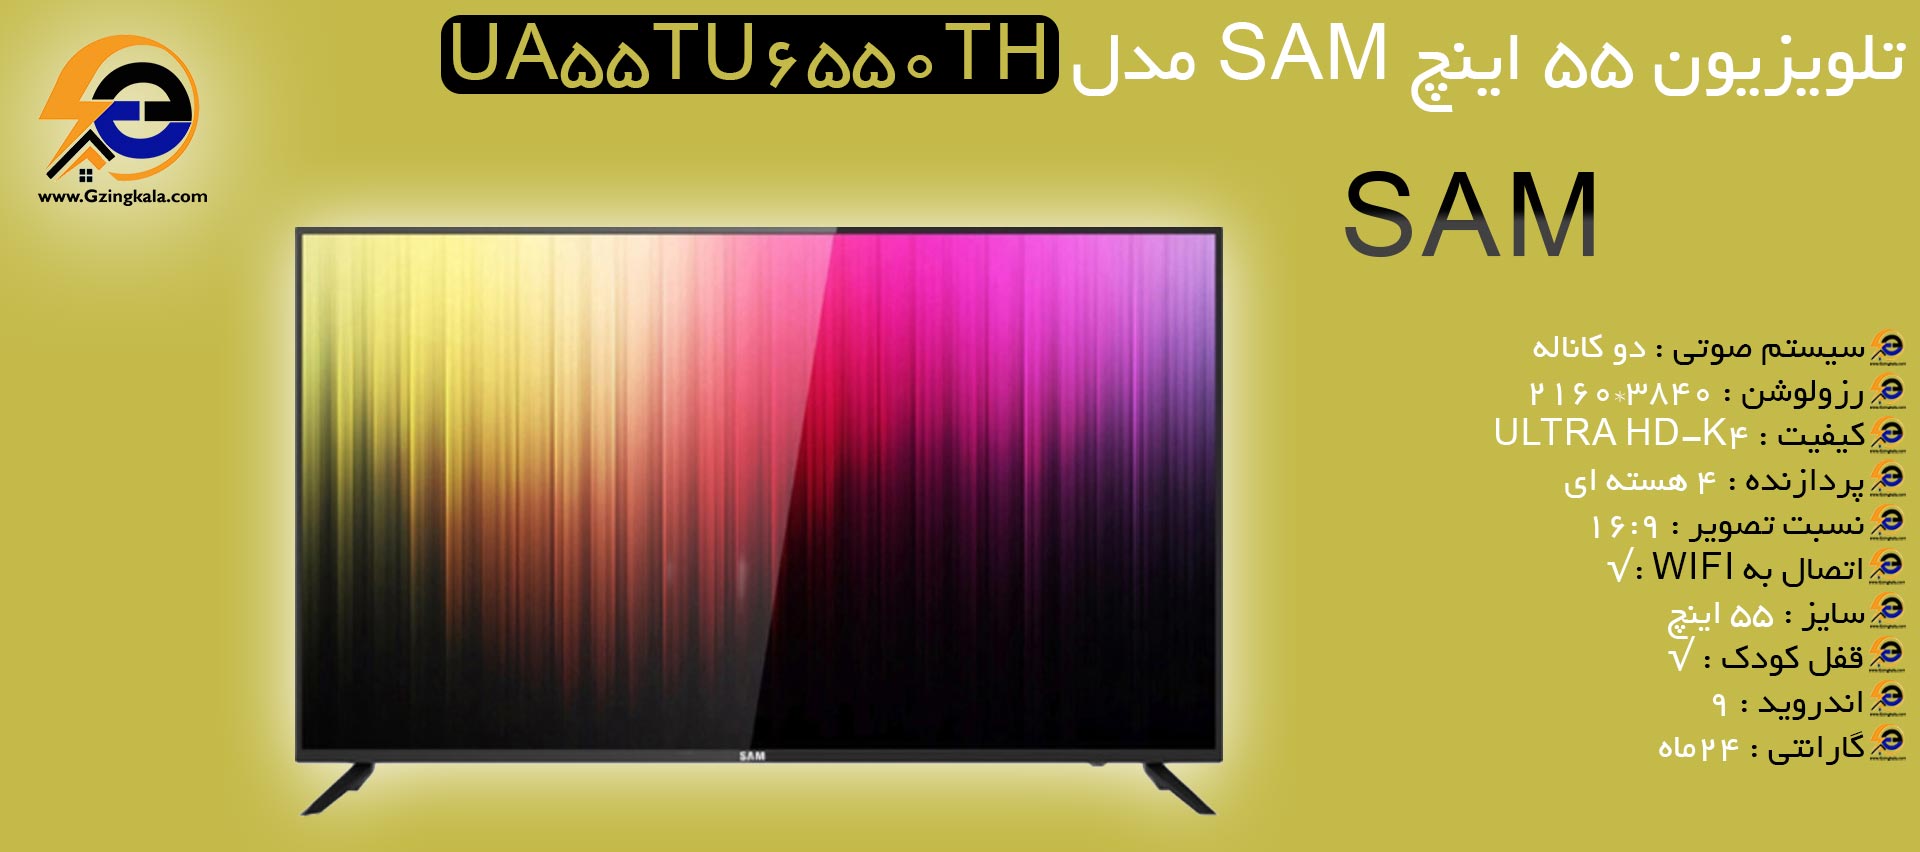 تلویزیون 55 اینچ SAM مدل UA55TU6550TH